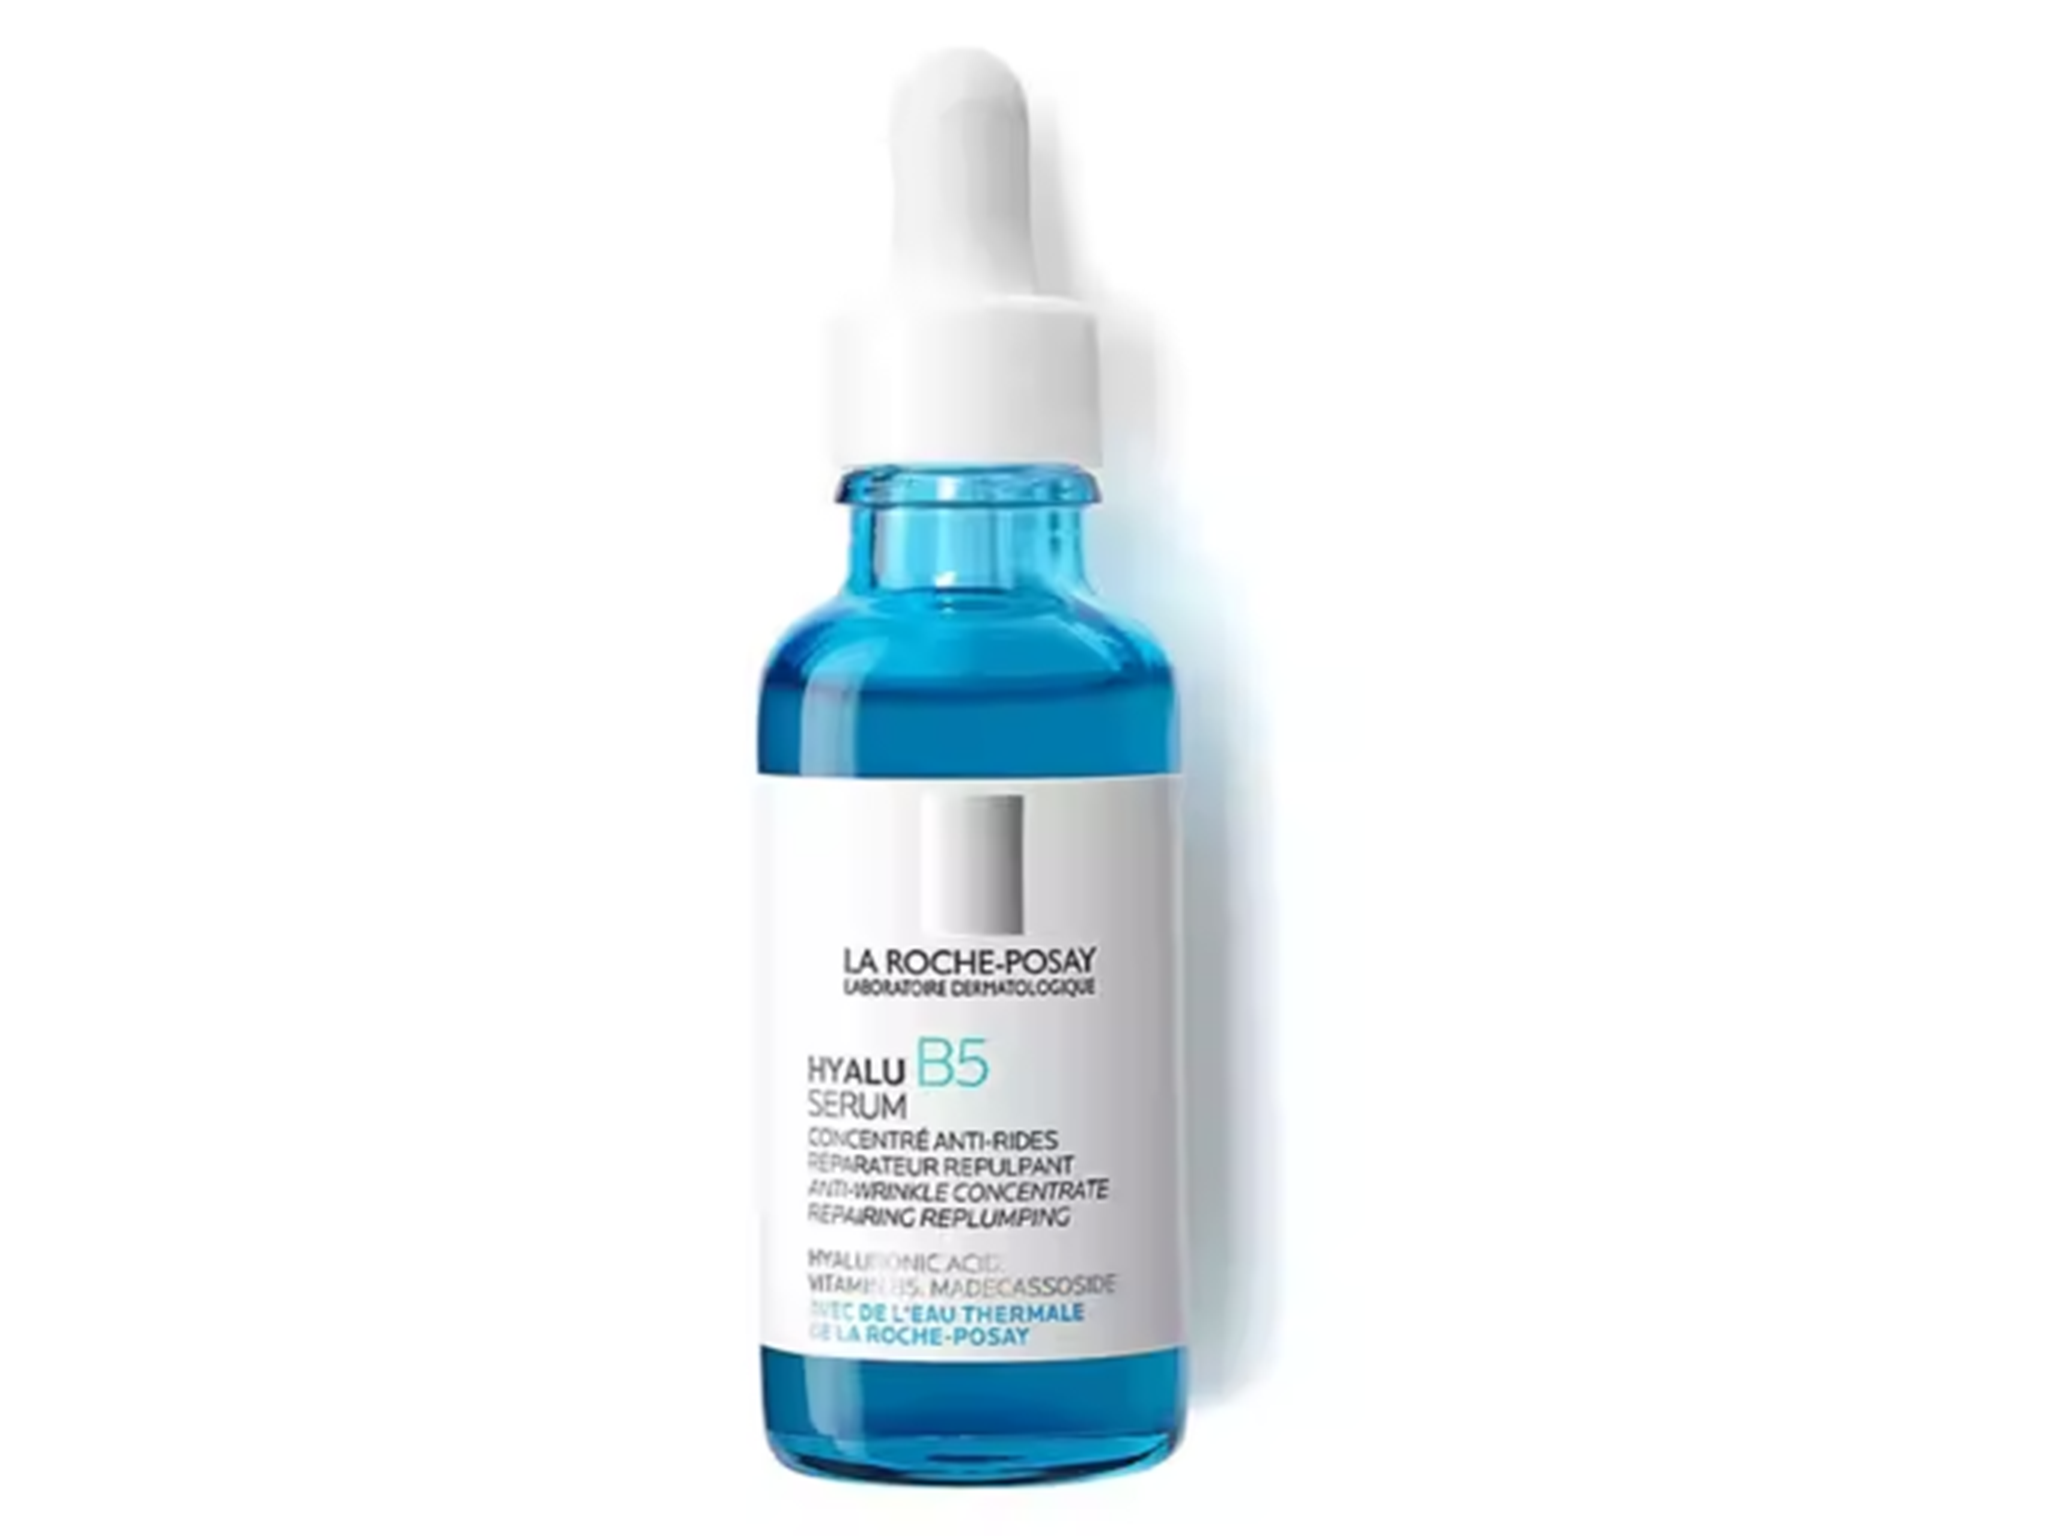 La Roche-Posay hyalu B5 hyaluronic acid serum for dehydrated skin review